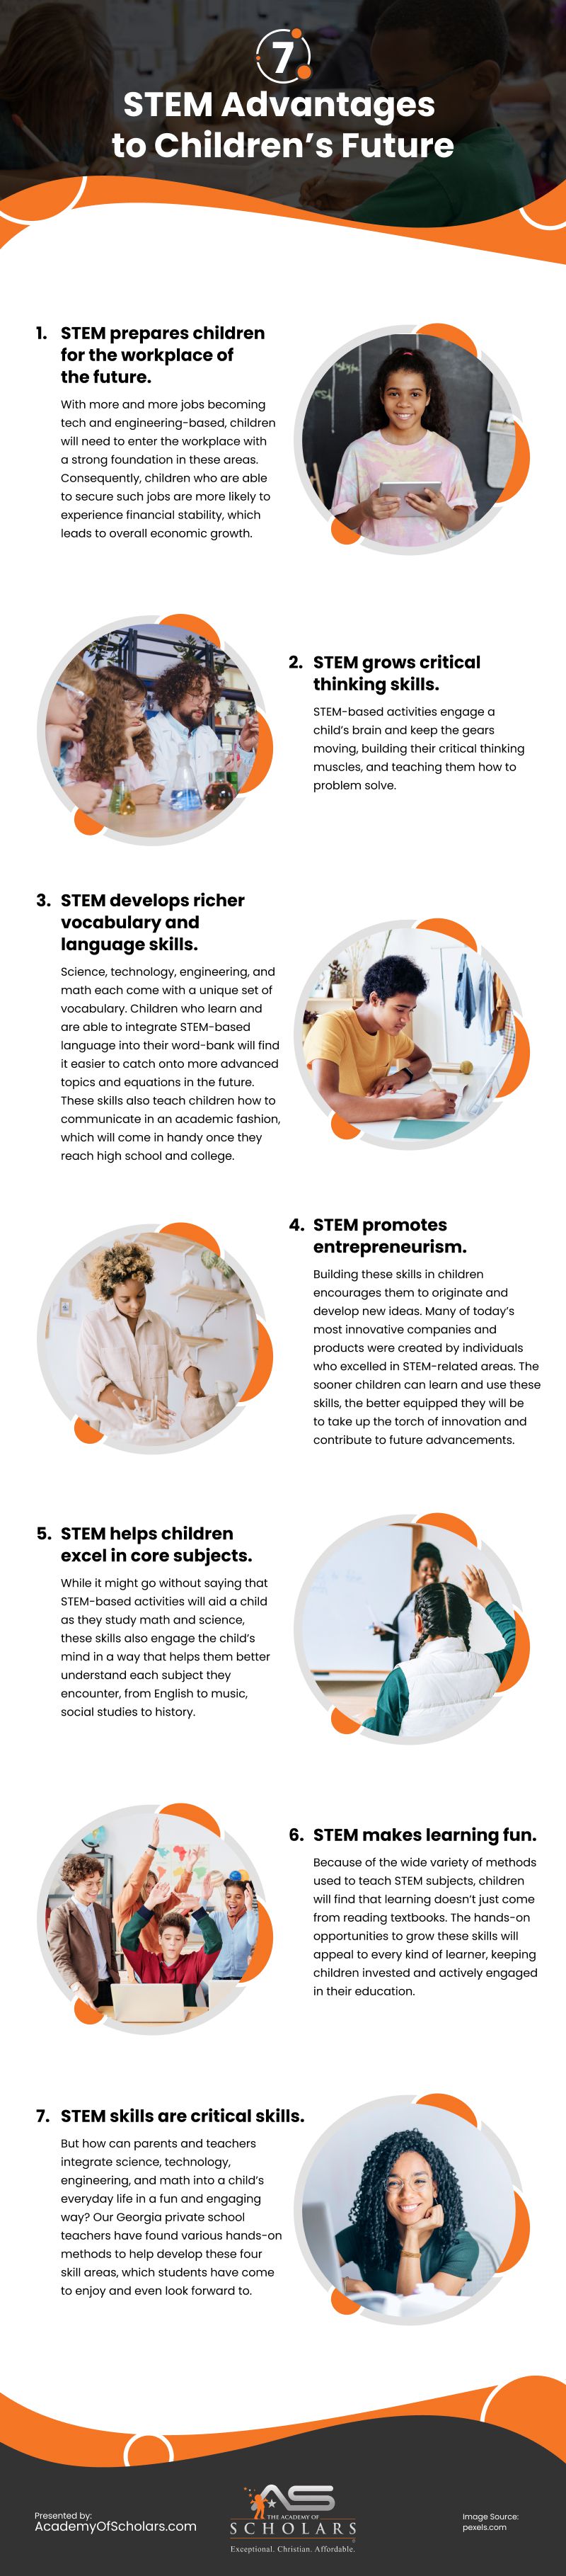 7 STEM Advantages to Children’s Future Infographic